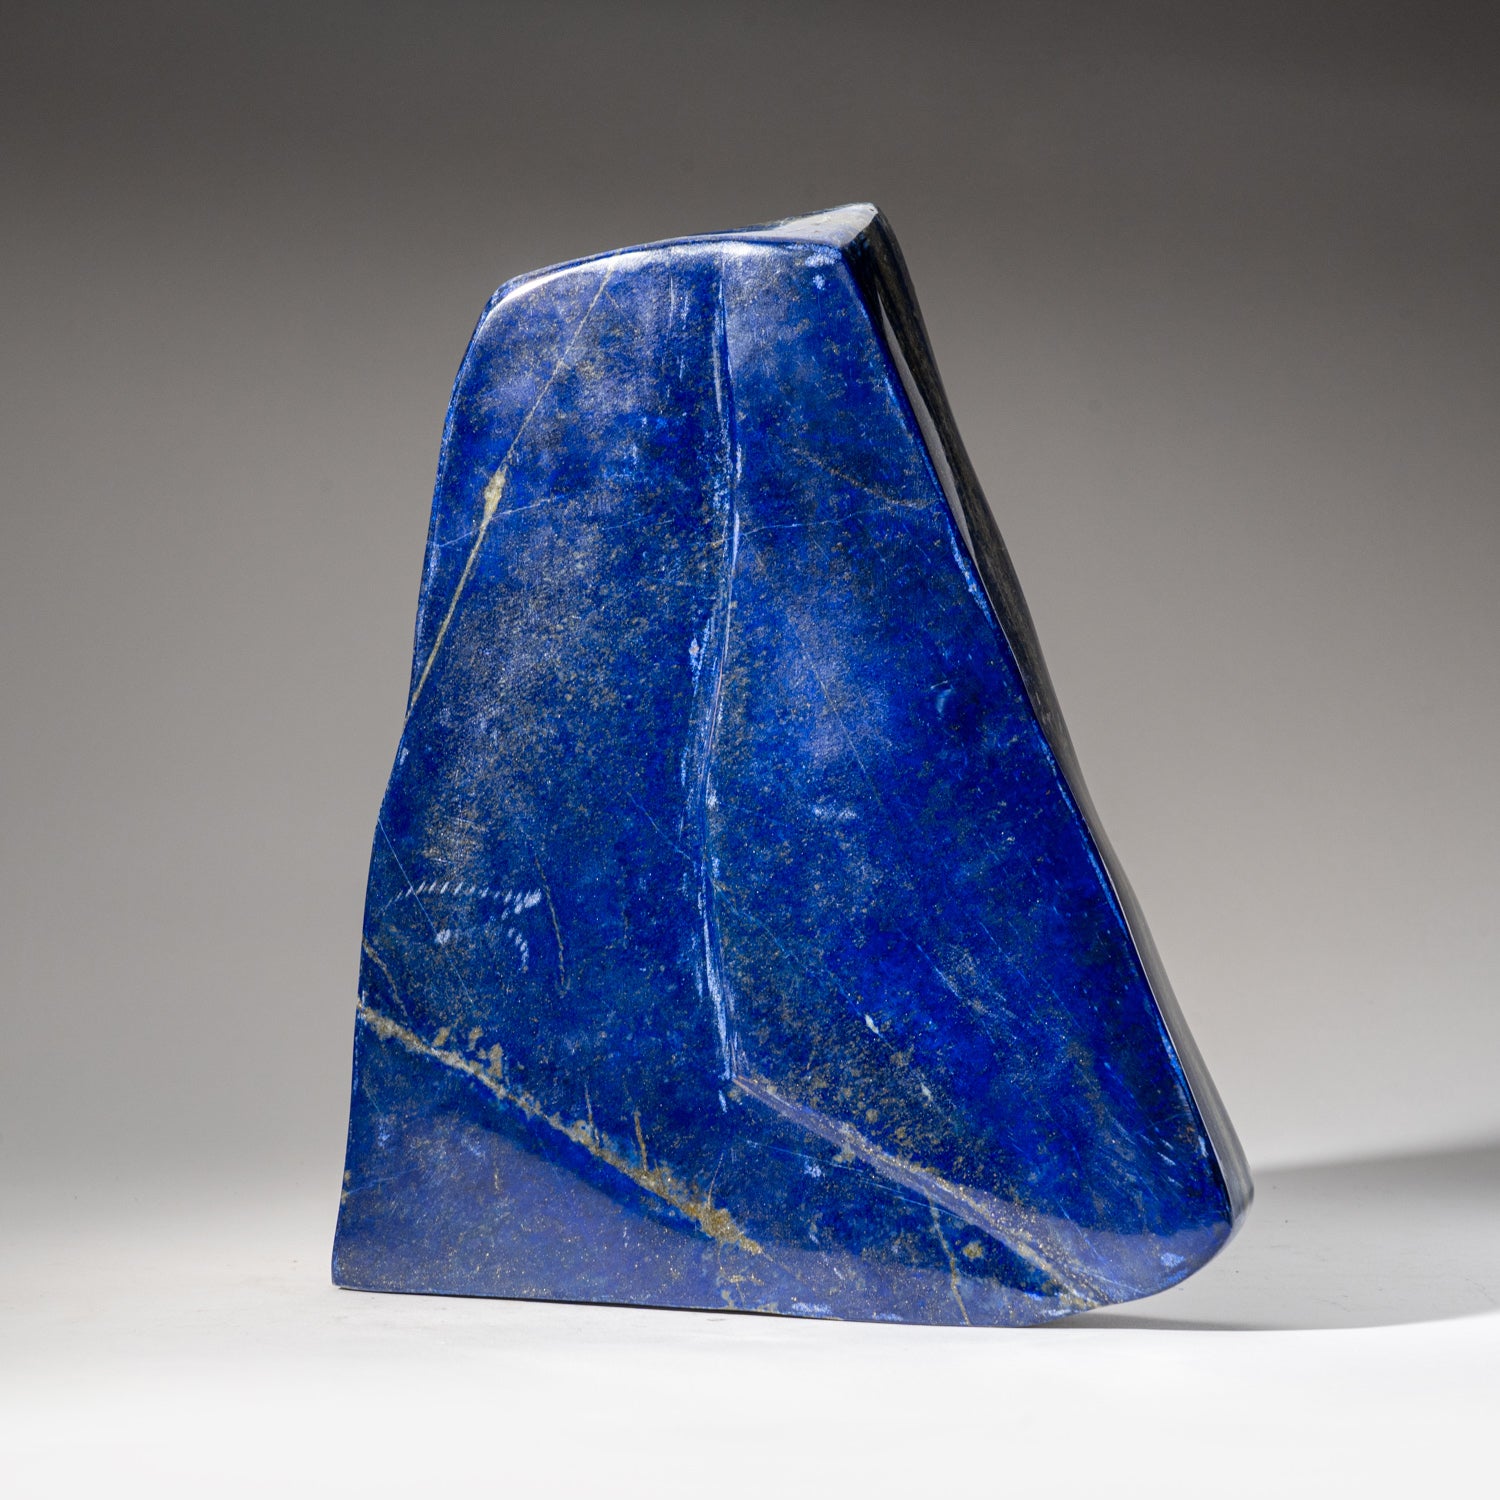 Polished Lapis Lazuli Freeform from Afghanistan (9.5 lbs)